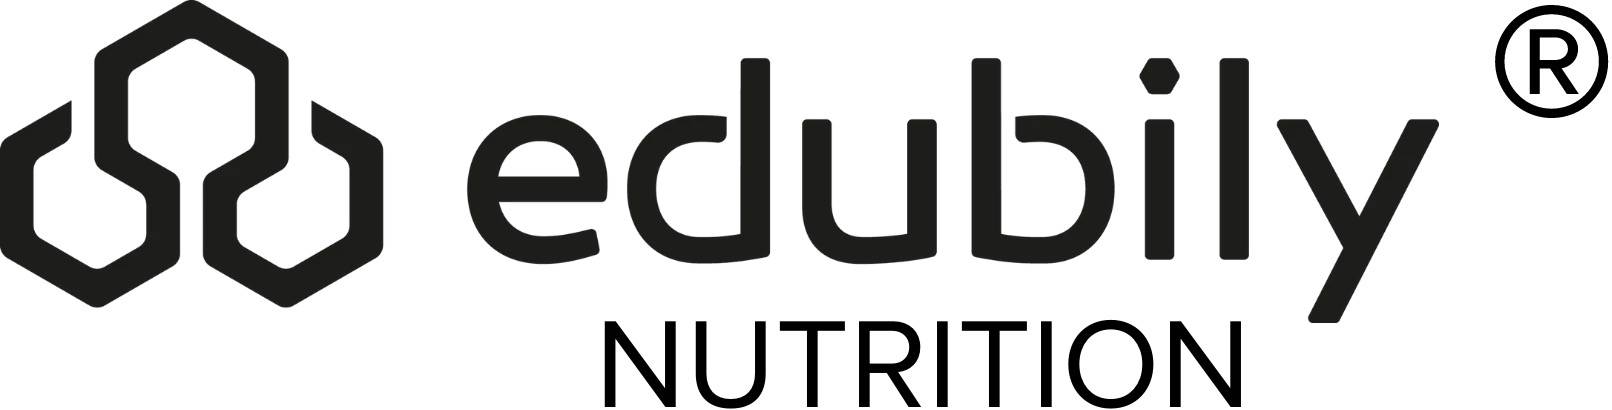 Edubily Nutrition Logo